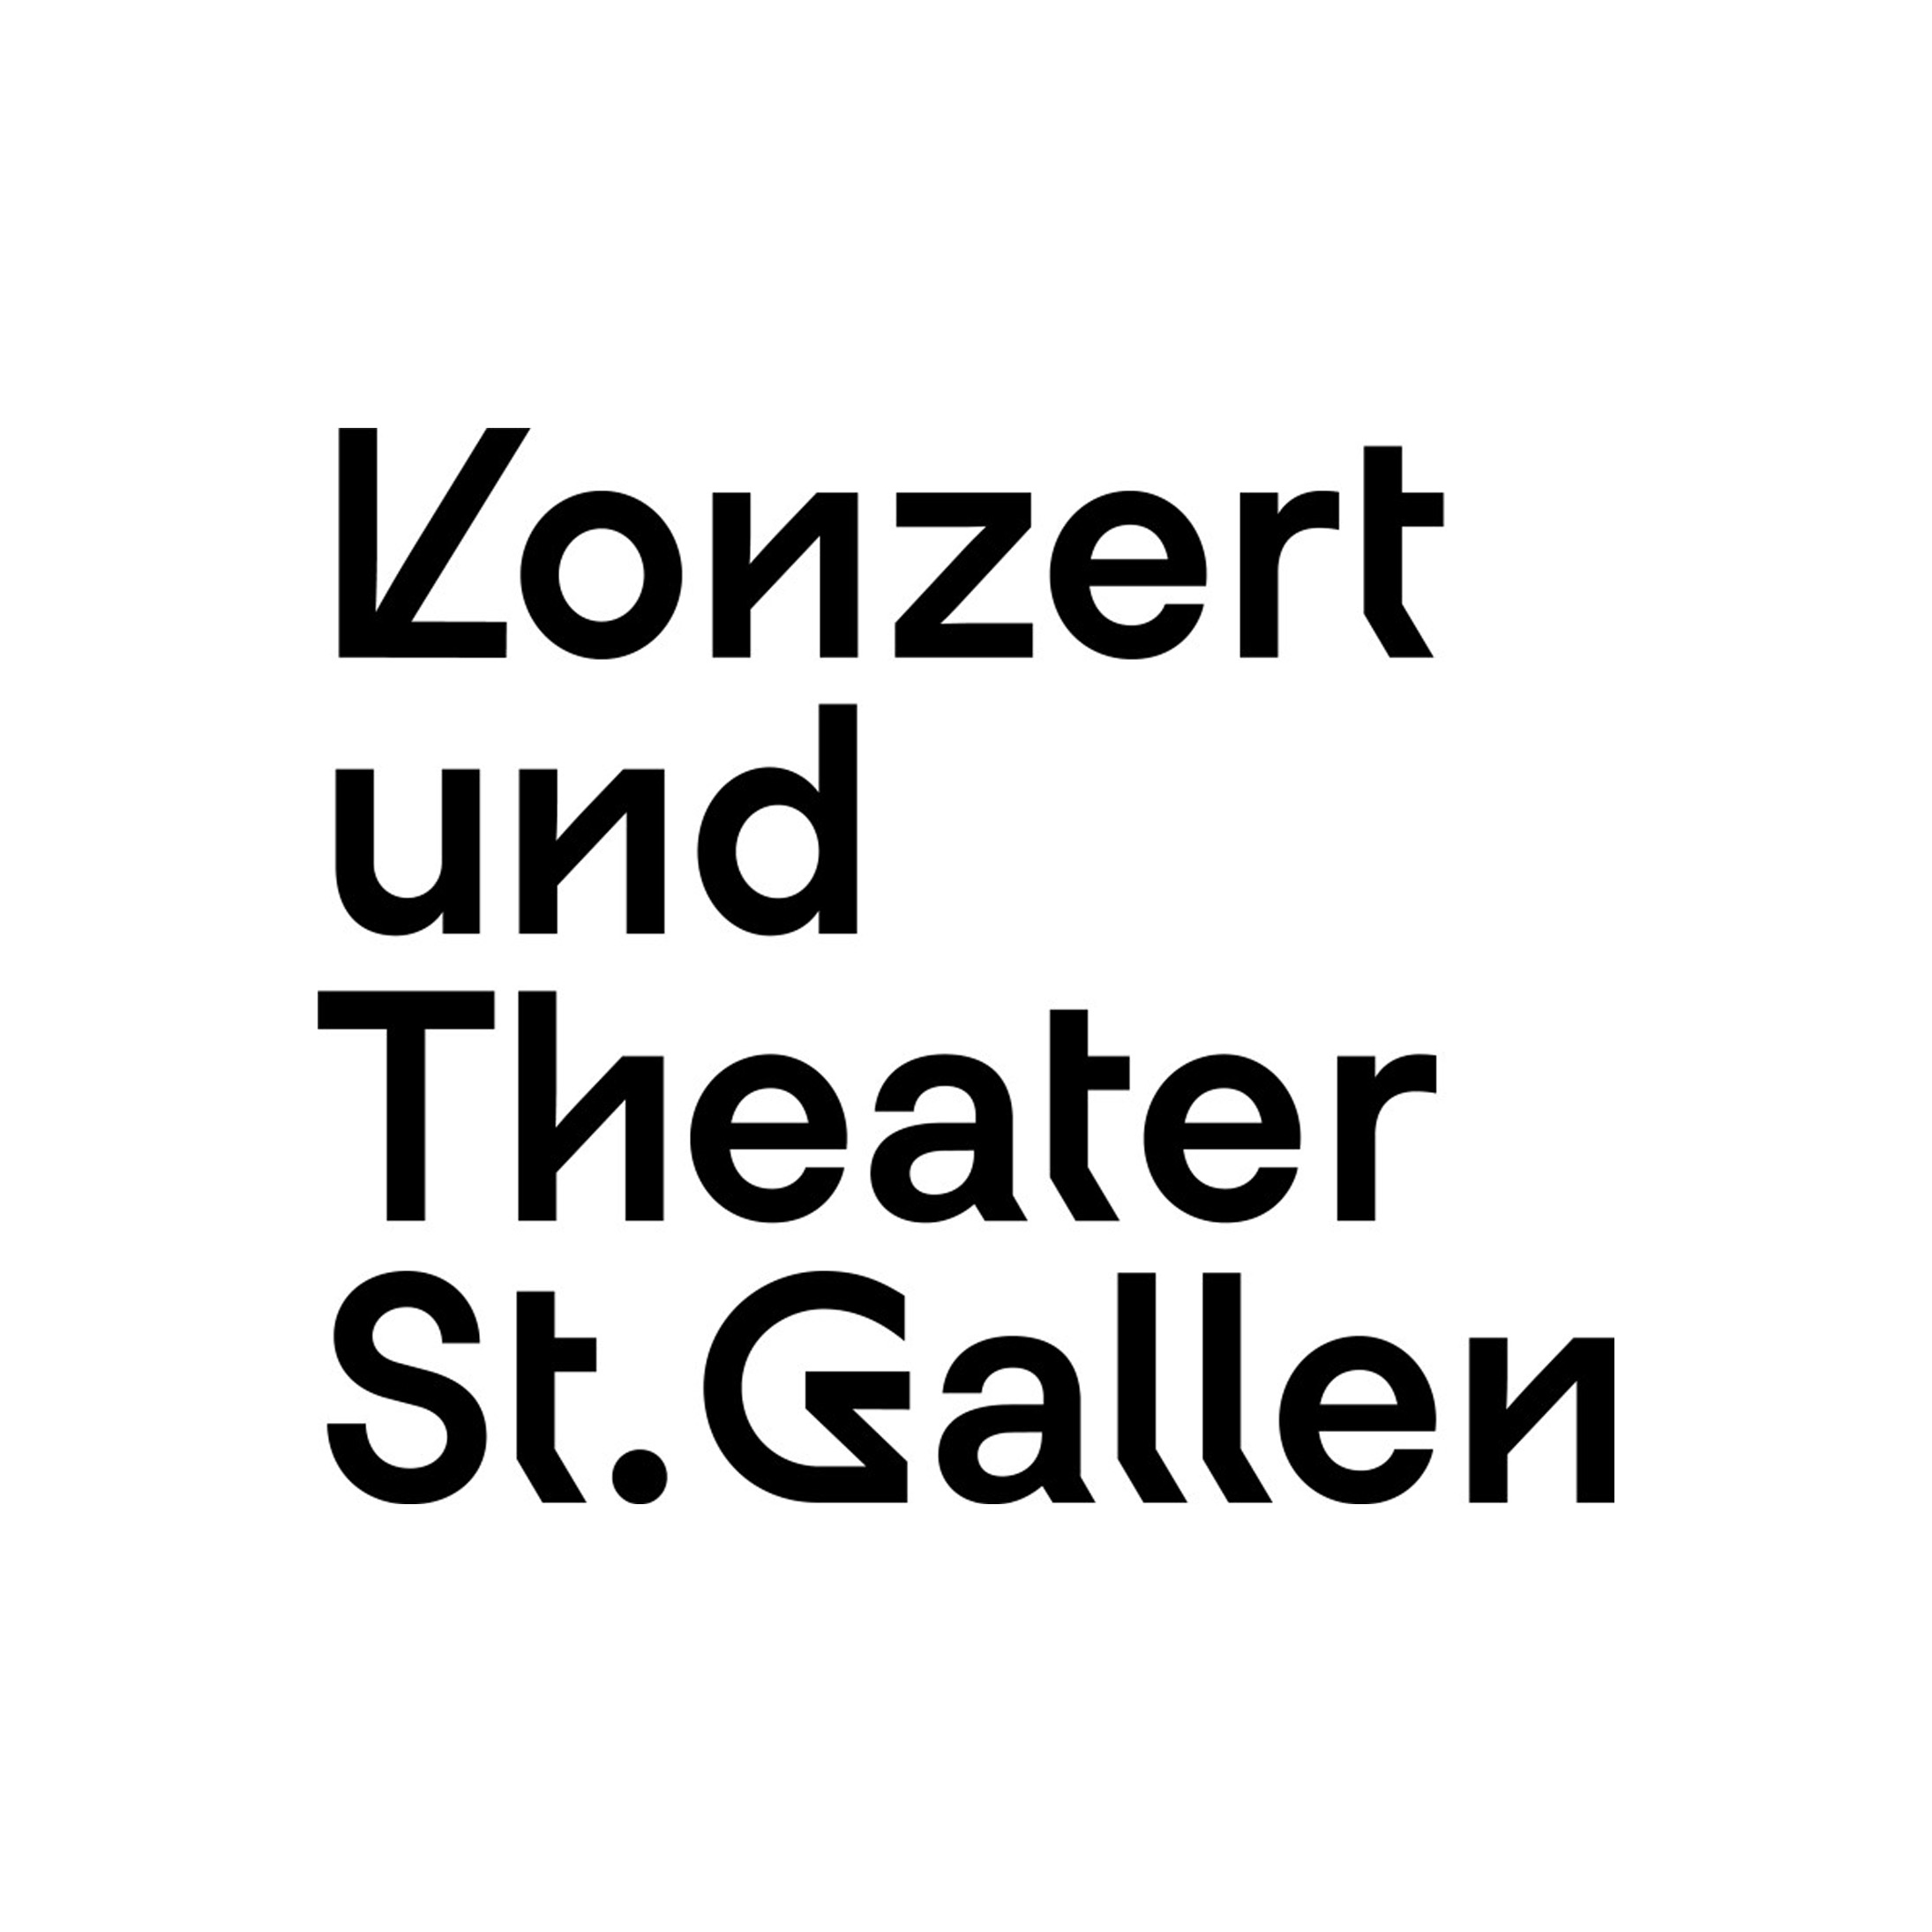 ASC_Logo_Kunden_TheaterStGallen